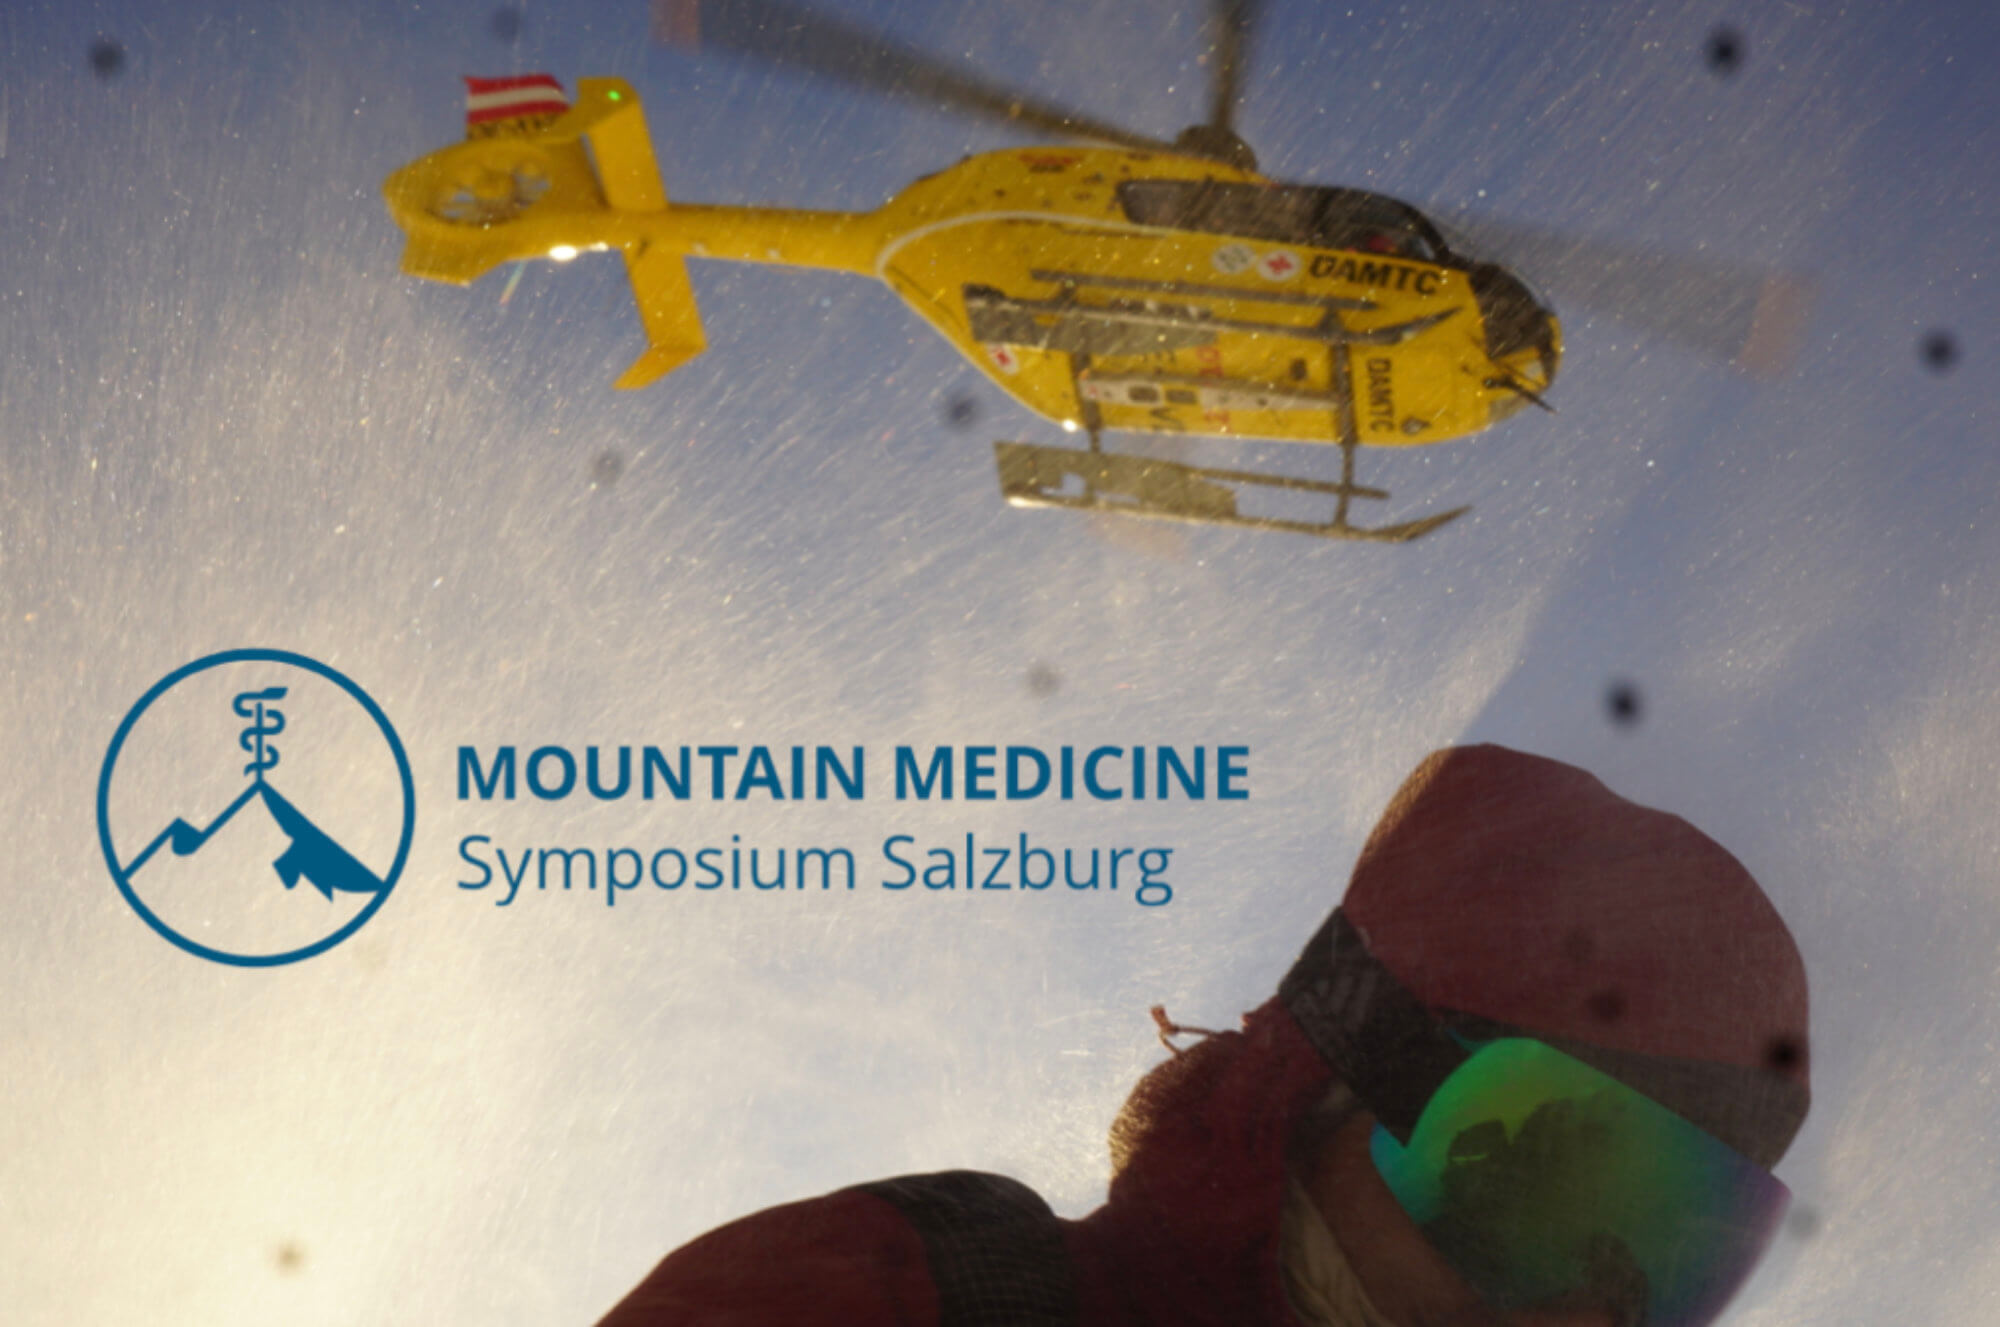 Mountain Medicine Symposium Salzburg | bergundsteigen.blog|Mountain Medicine Symposium Salzburg I bergundsteigen.blog|Mountain Medicine Symposium Salzburg I bergundsteigen.blog